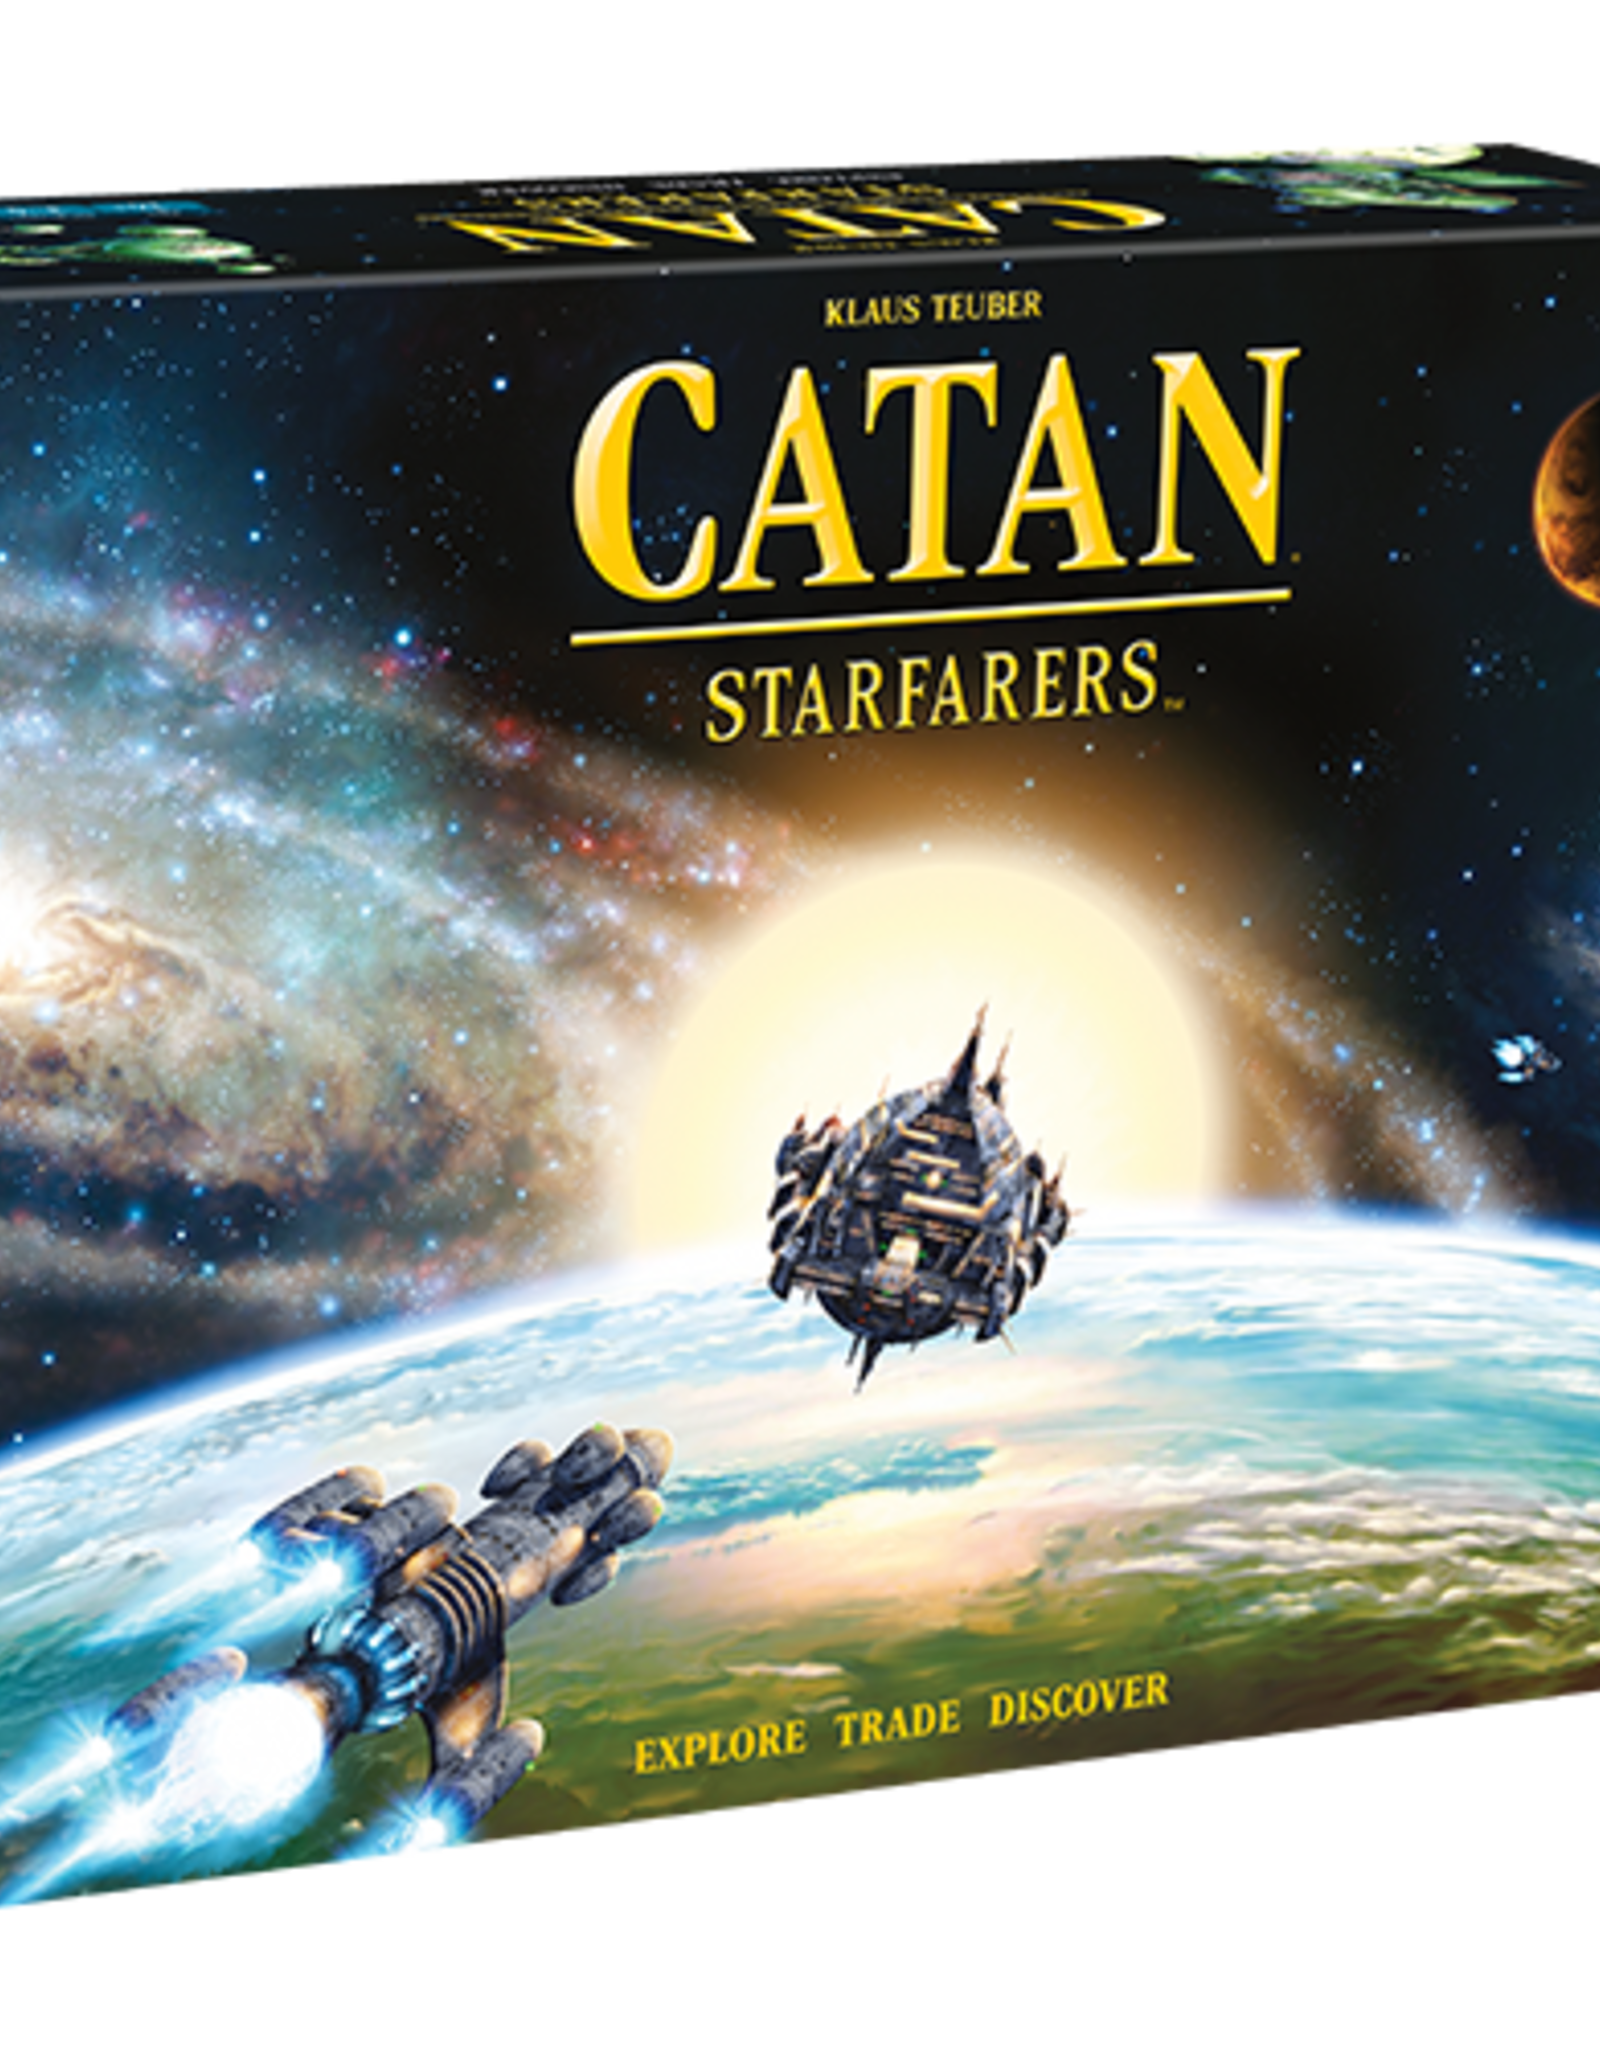 starfarers of catan